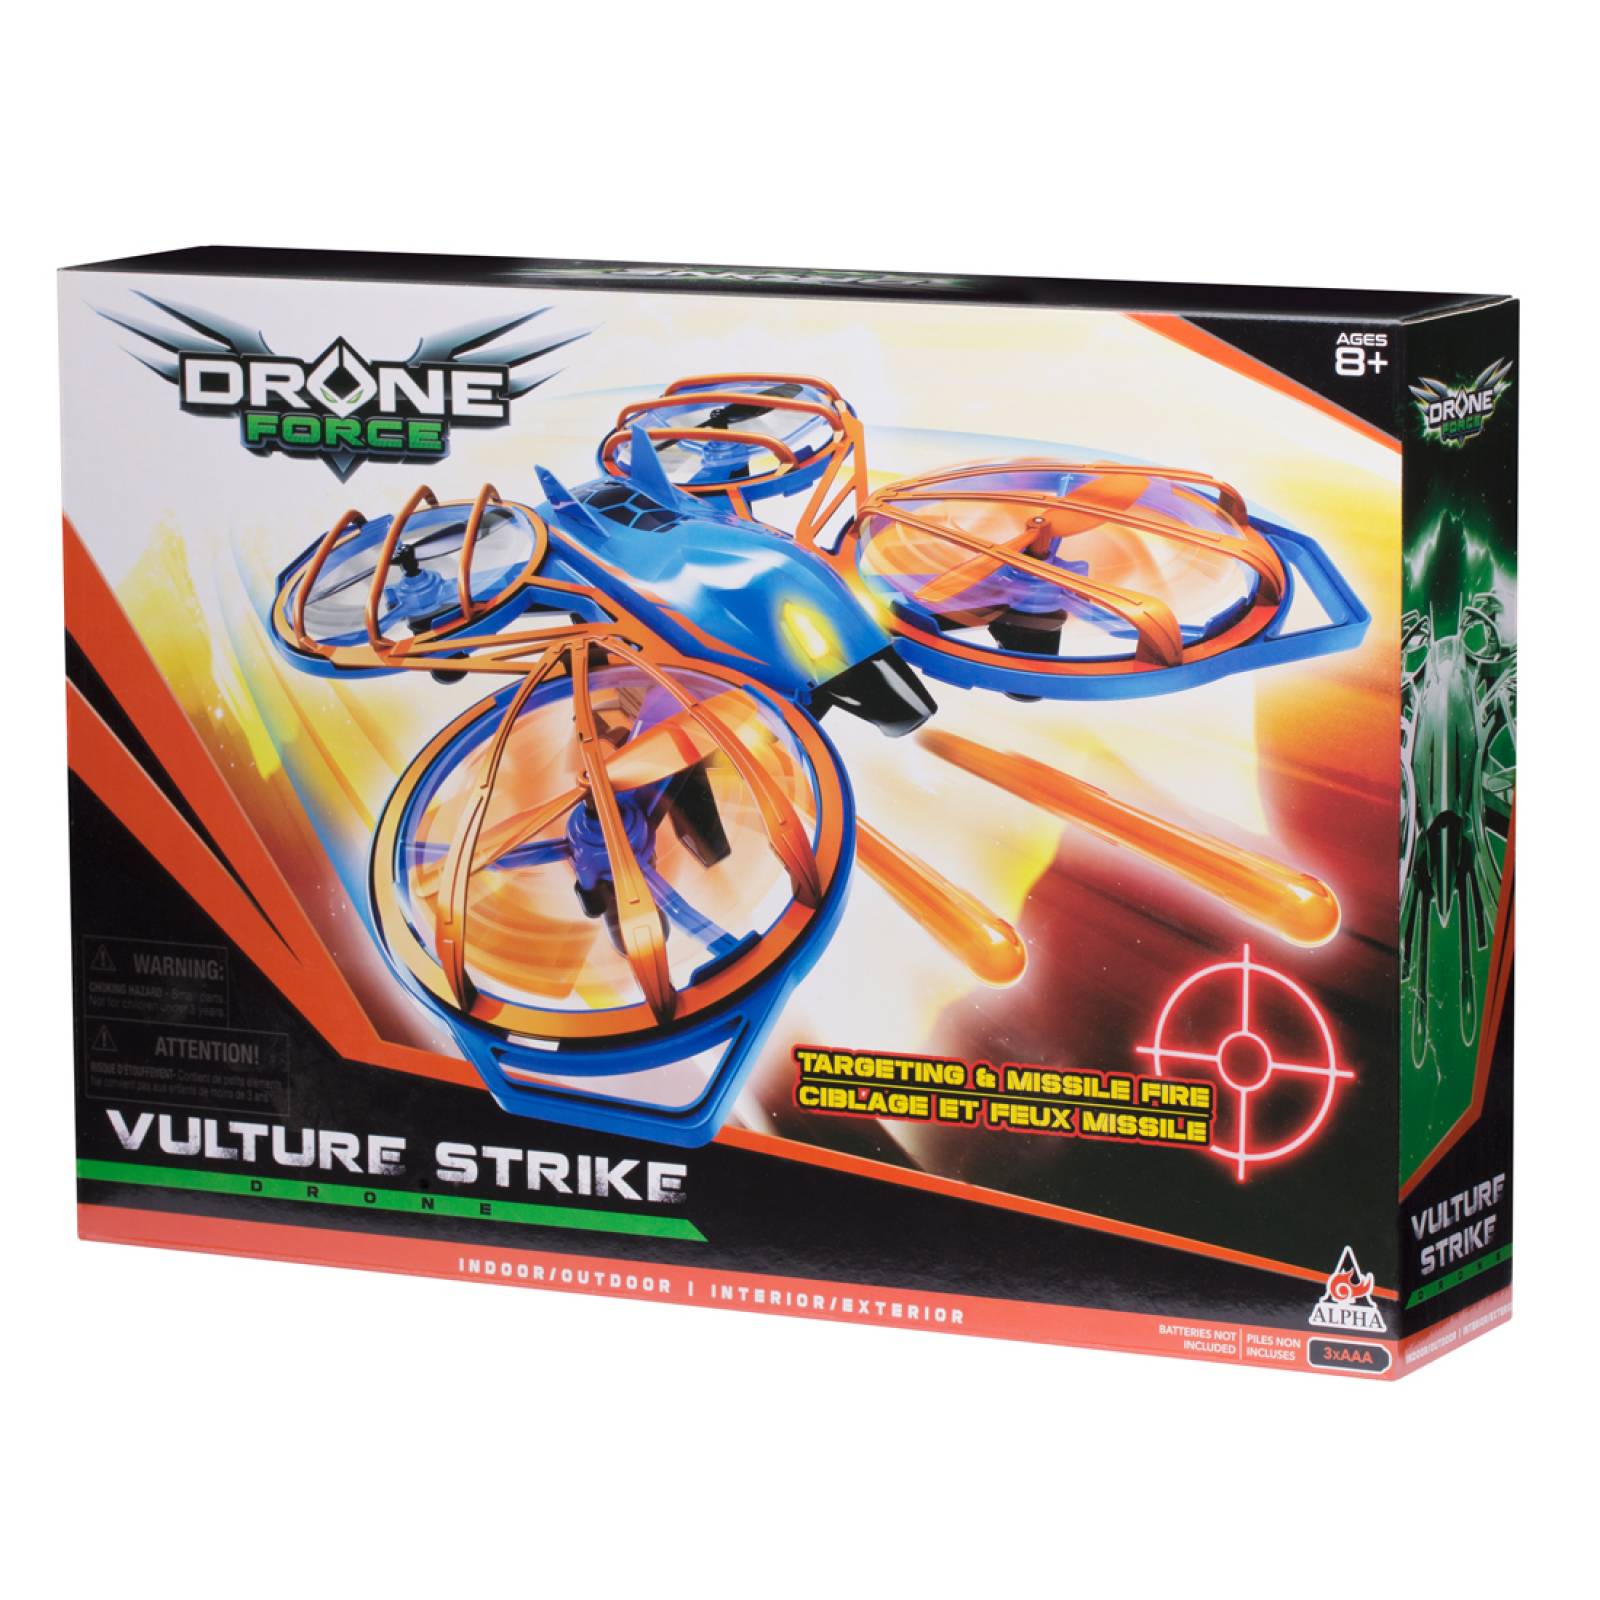 Drone Force Juguete Interiores Avion Vulture Strike Toys